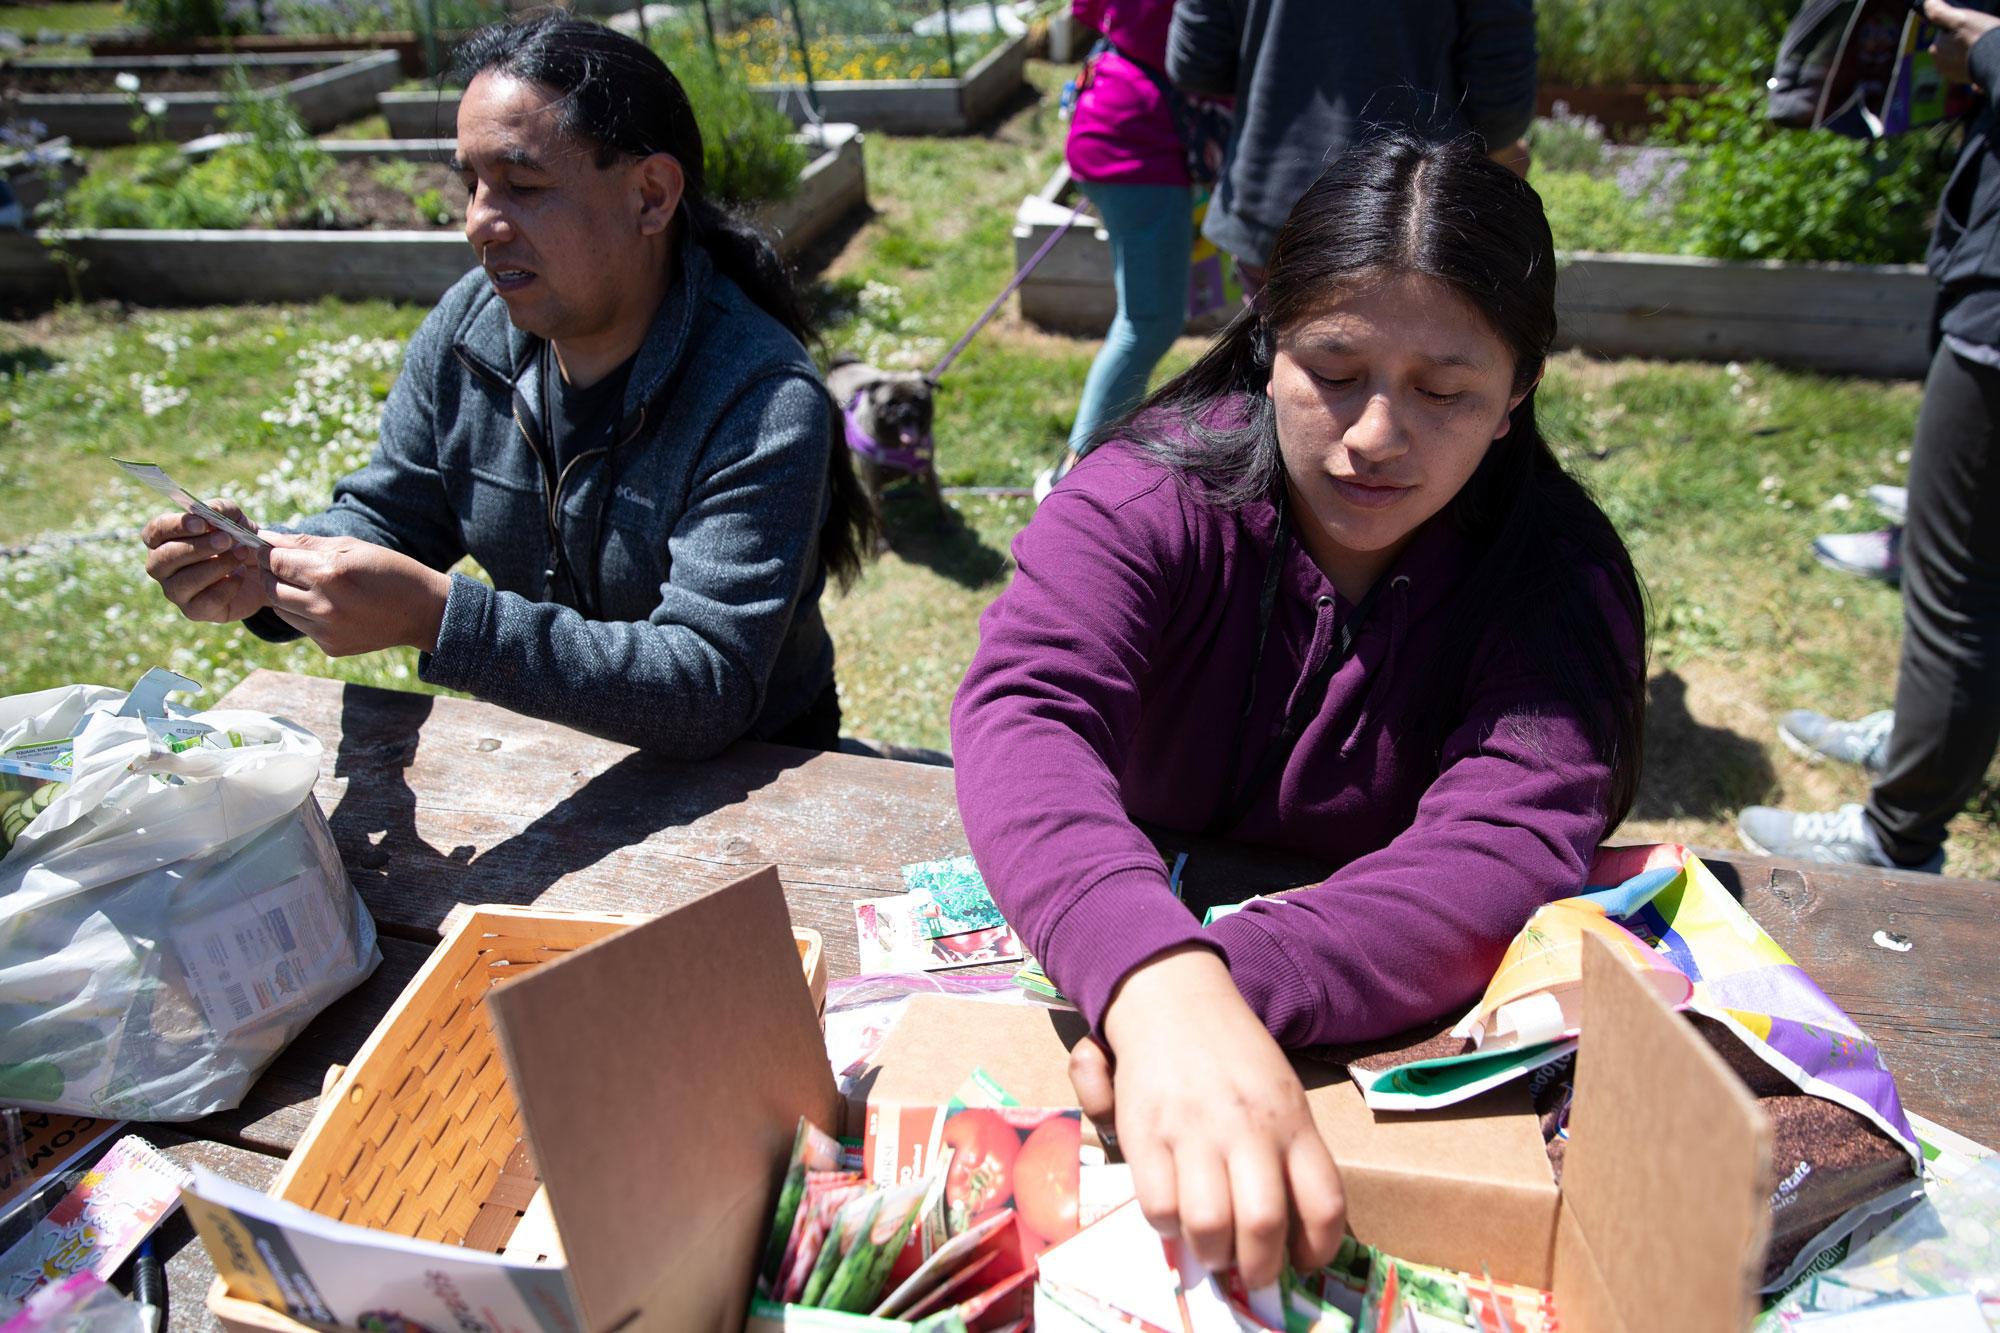 A Latino man and Latina woman sort vegetable seeds at a picnic table.